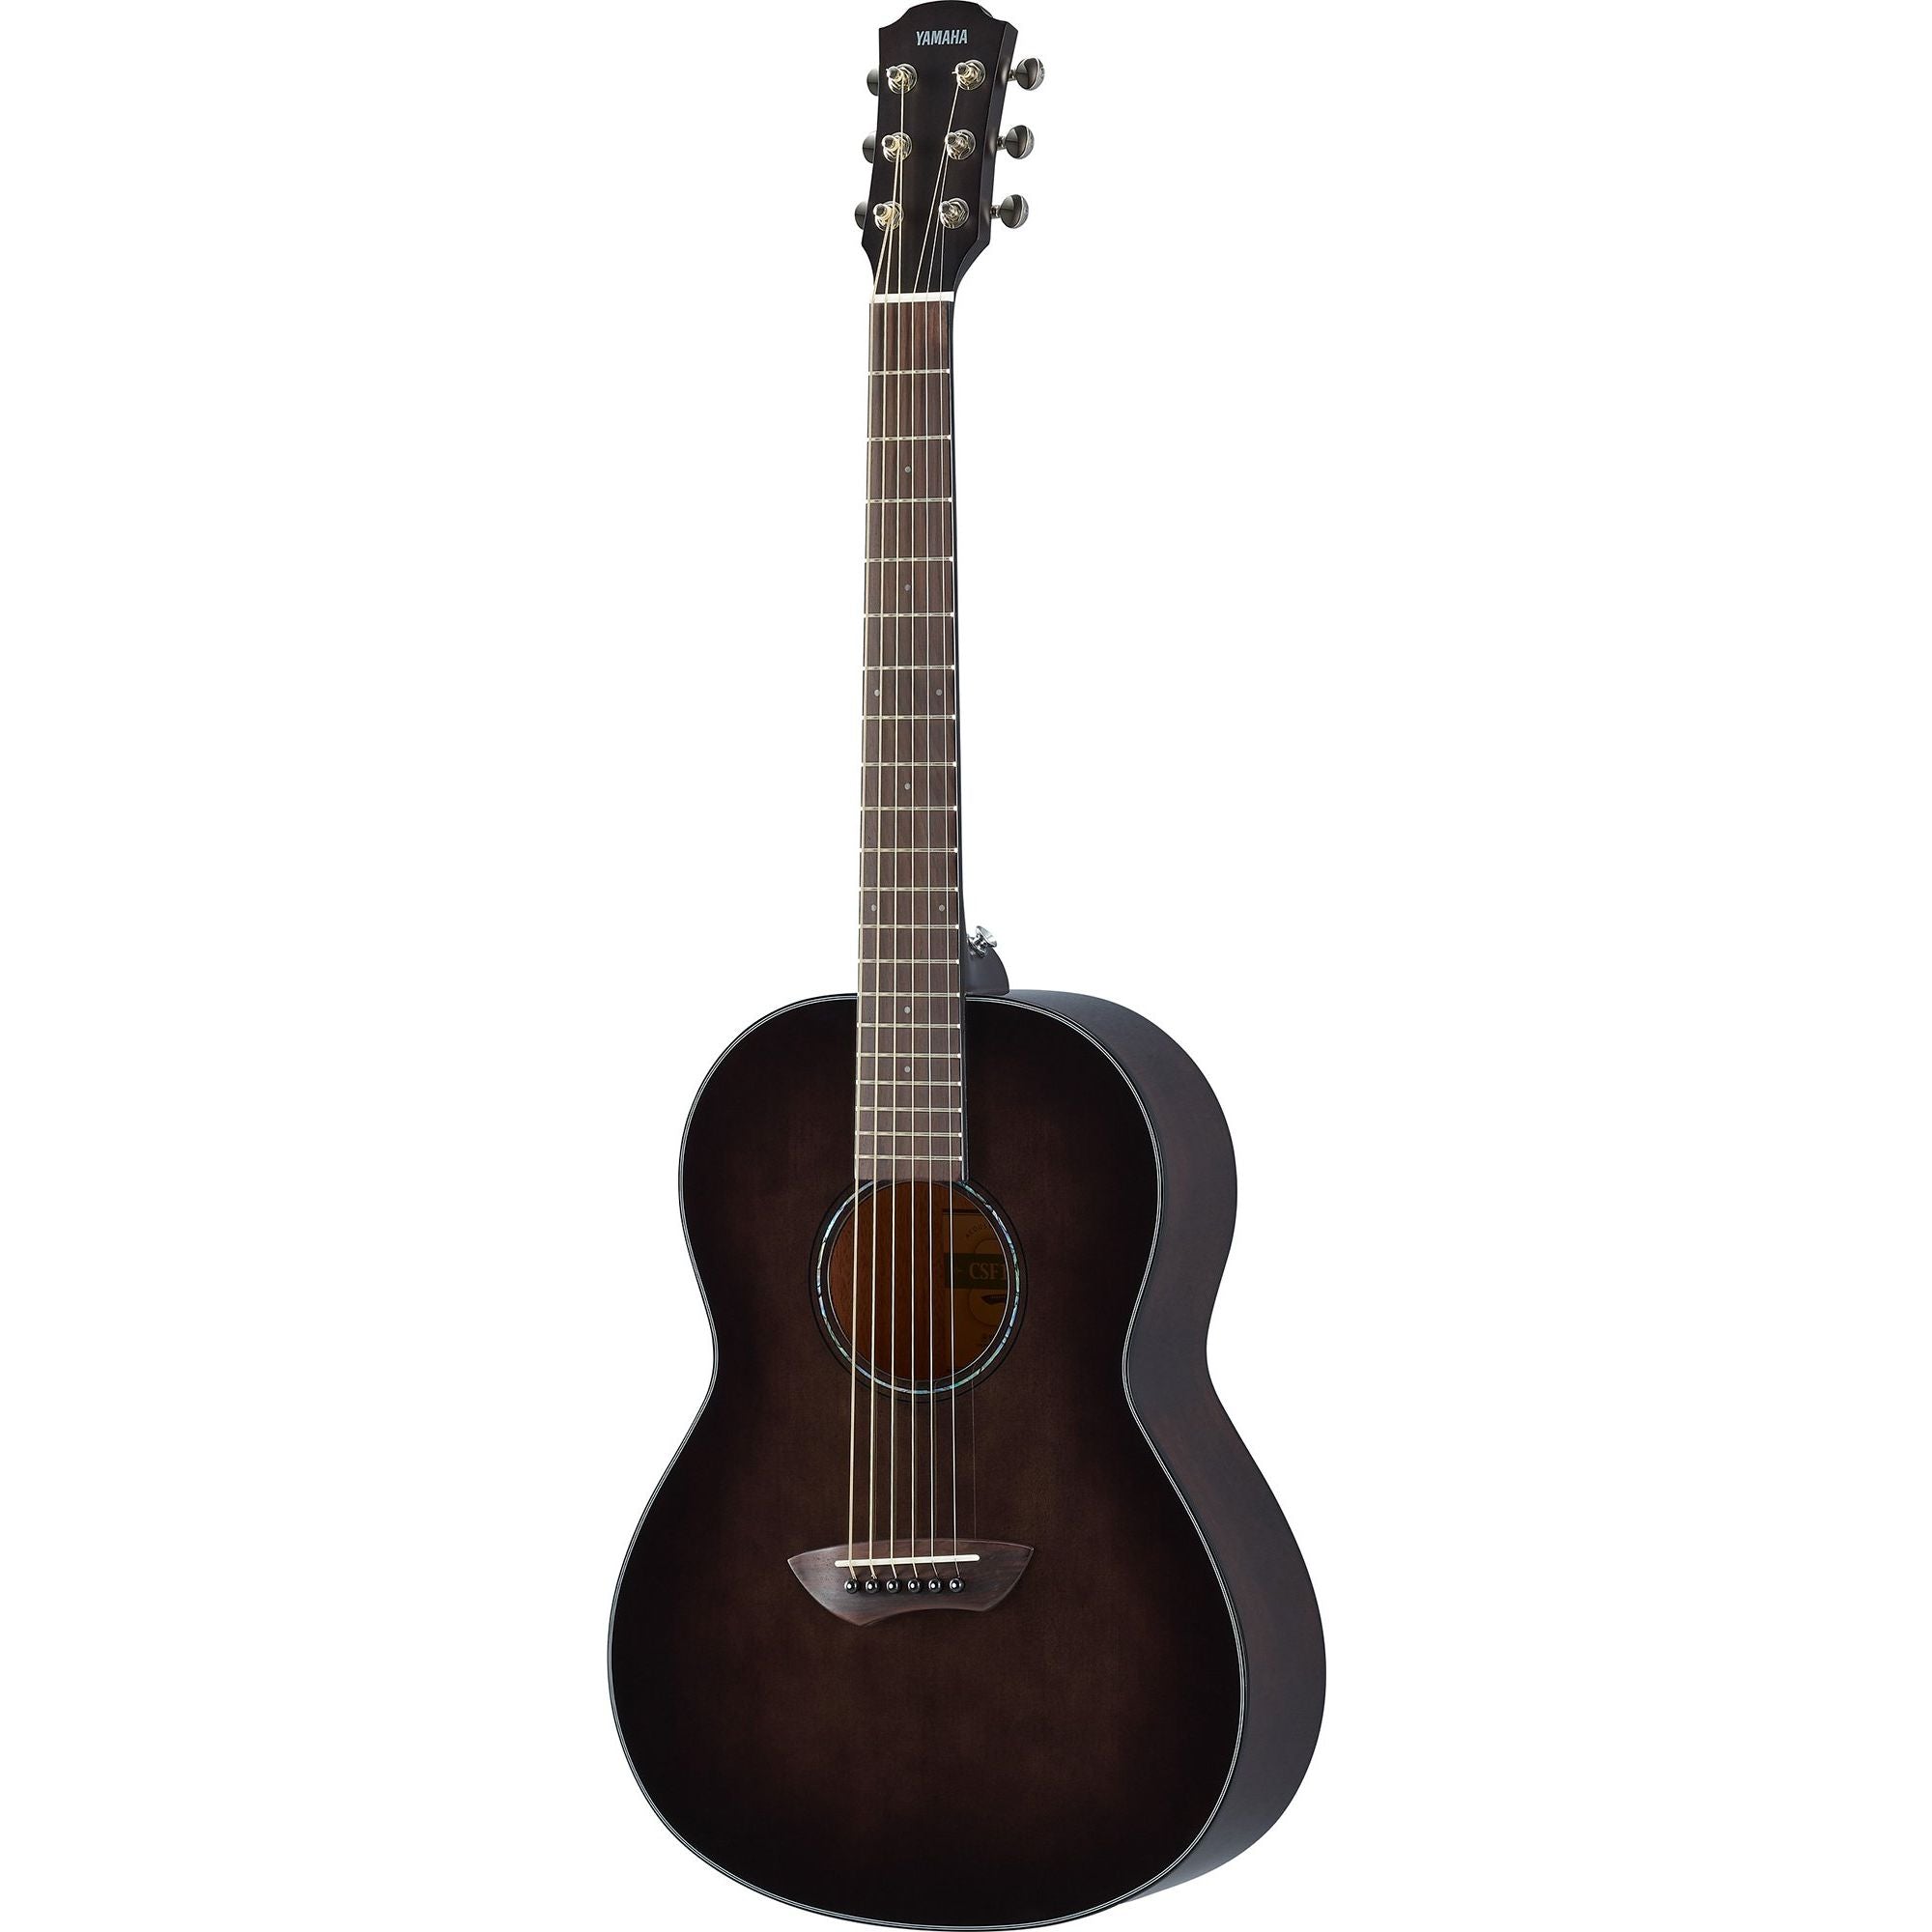 Yamaha CSF1M Modern Parlor Acoustic Guitar, Translucent Black